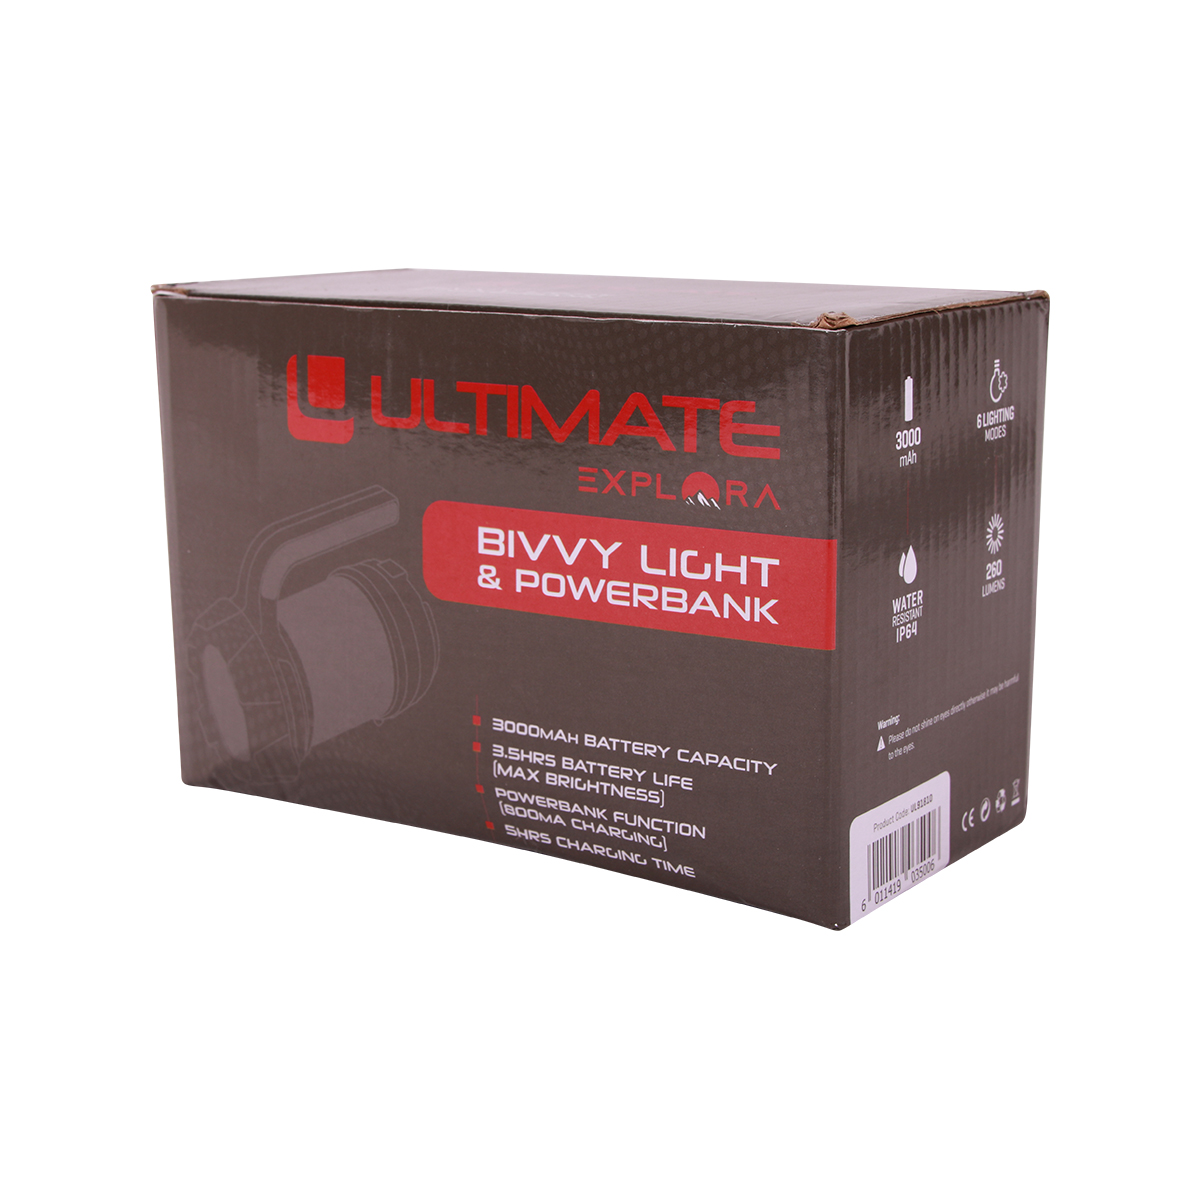 Lampe et Batterie Portative Ultimate Explora Bivvy